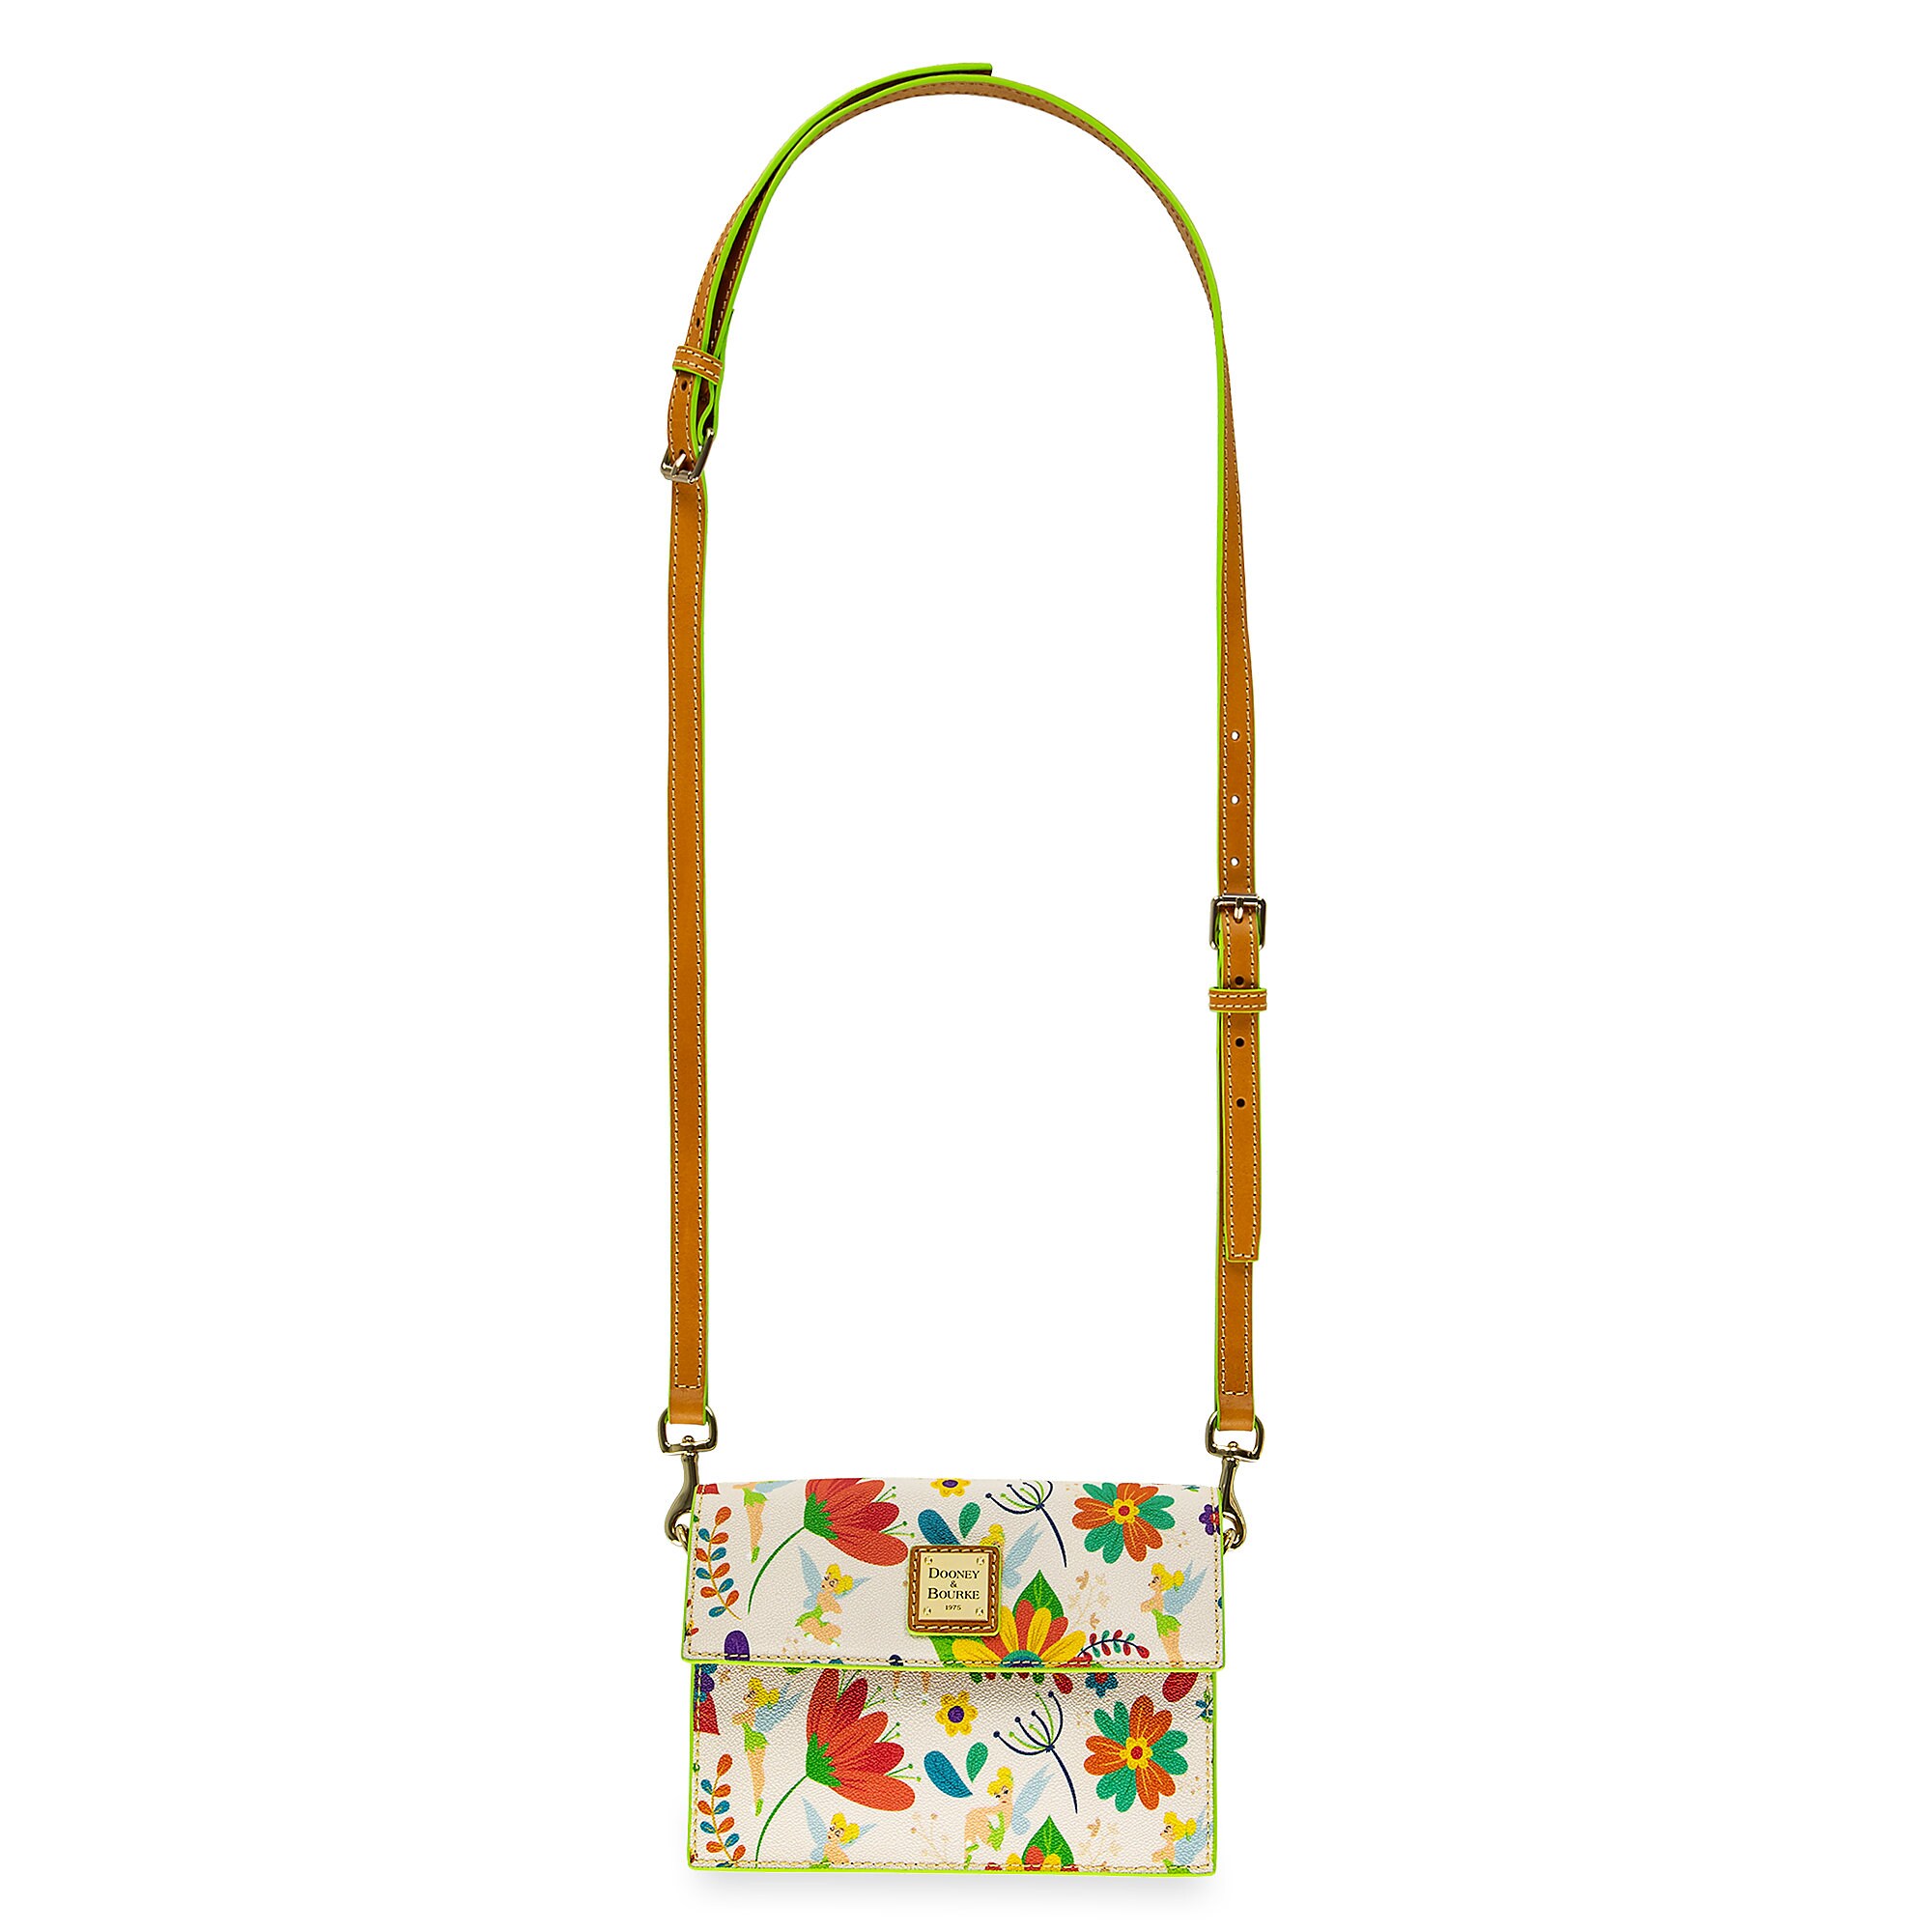 Tinker Bell Crossbody Bag by Dooney & Bourke